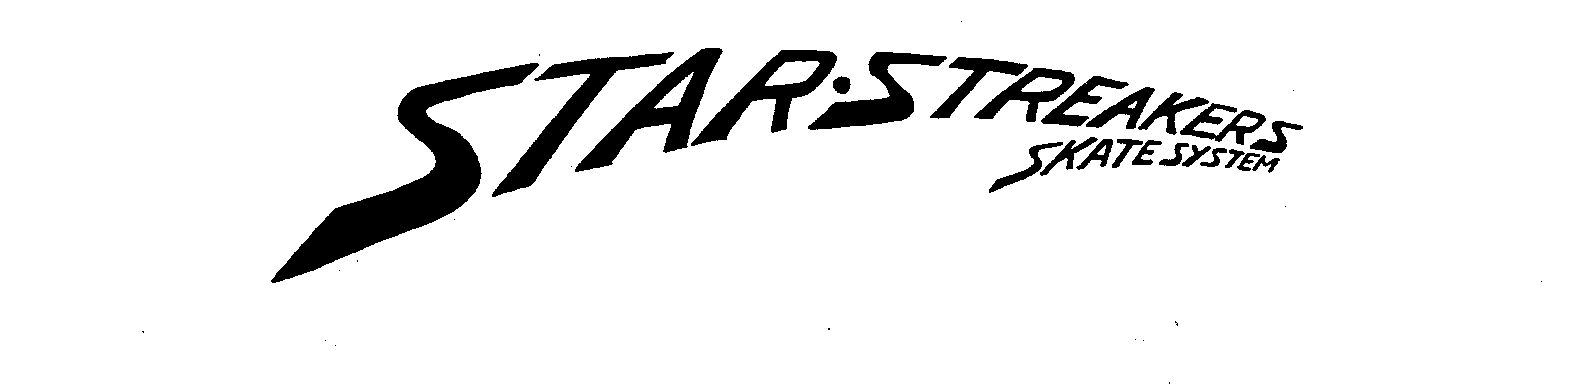  STAR-STREAKERS SKATE SYSTEM